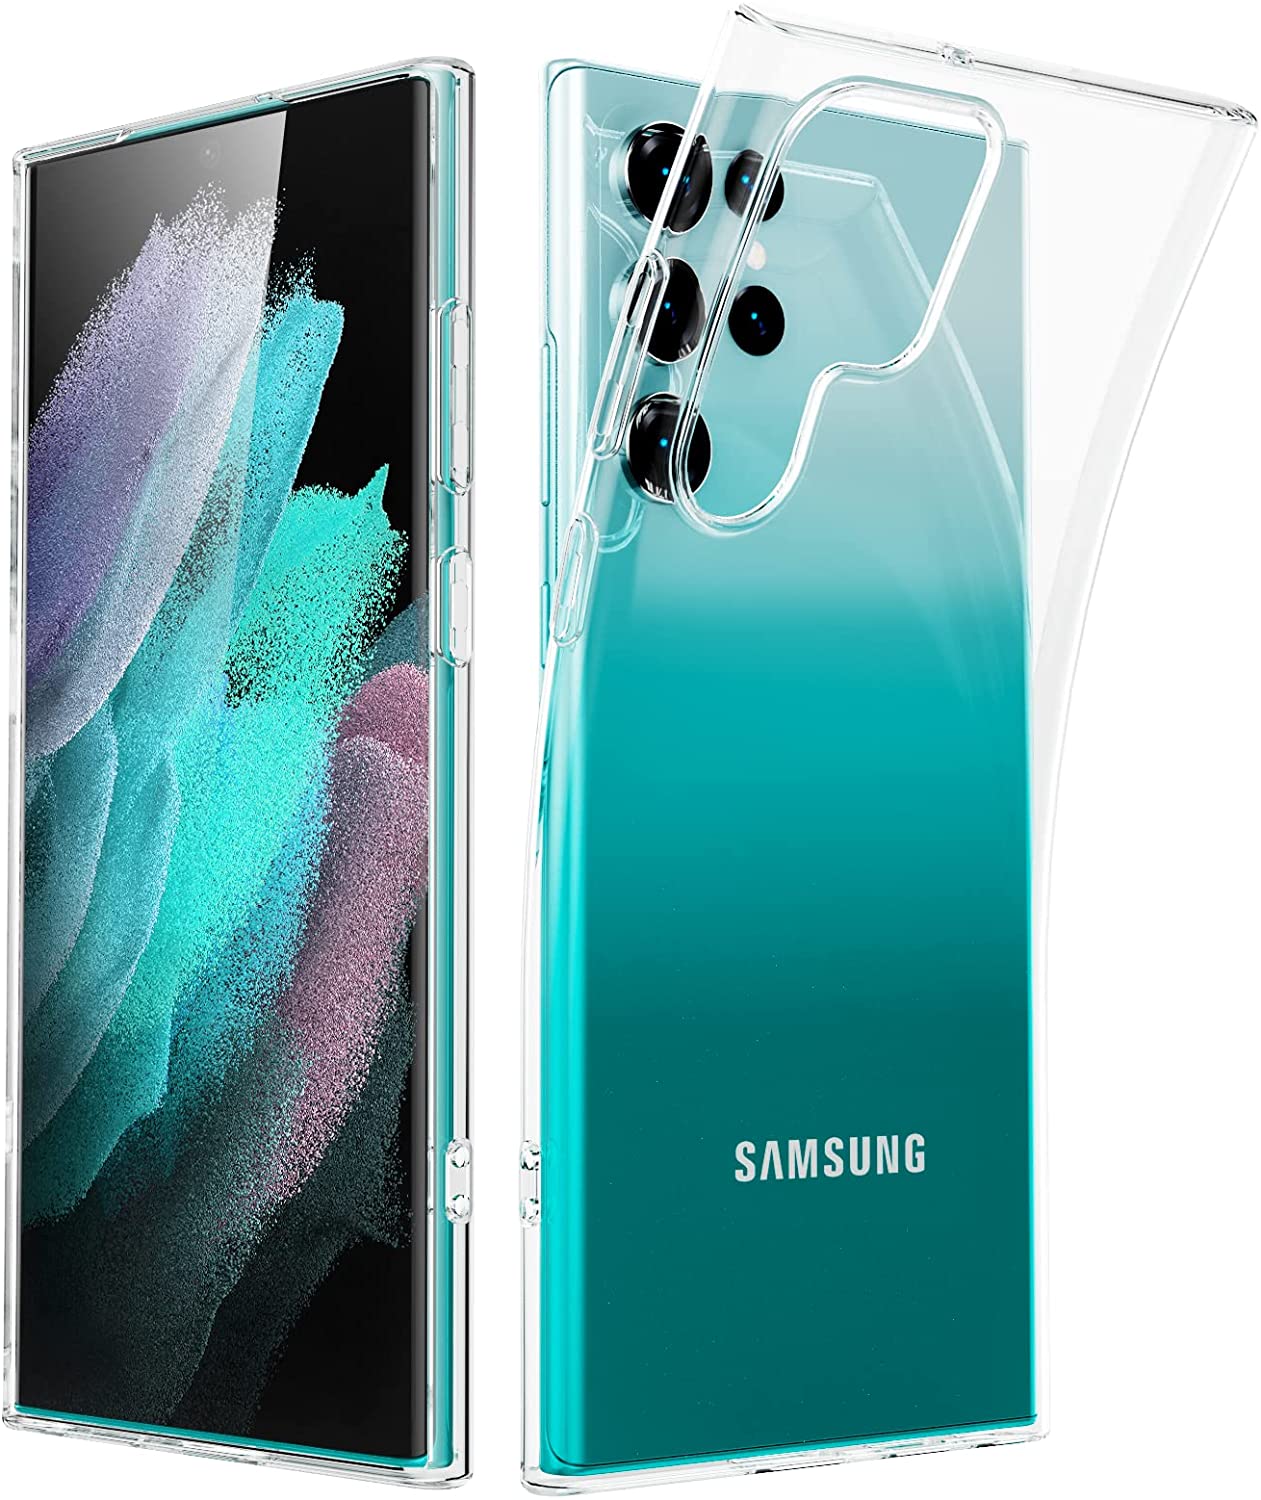 Coque SPECTR pour Samsung Galaxy S22, S22+, S22 Ultra - Transparente et  ultra fine